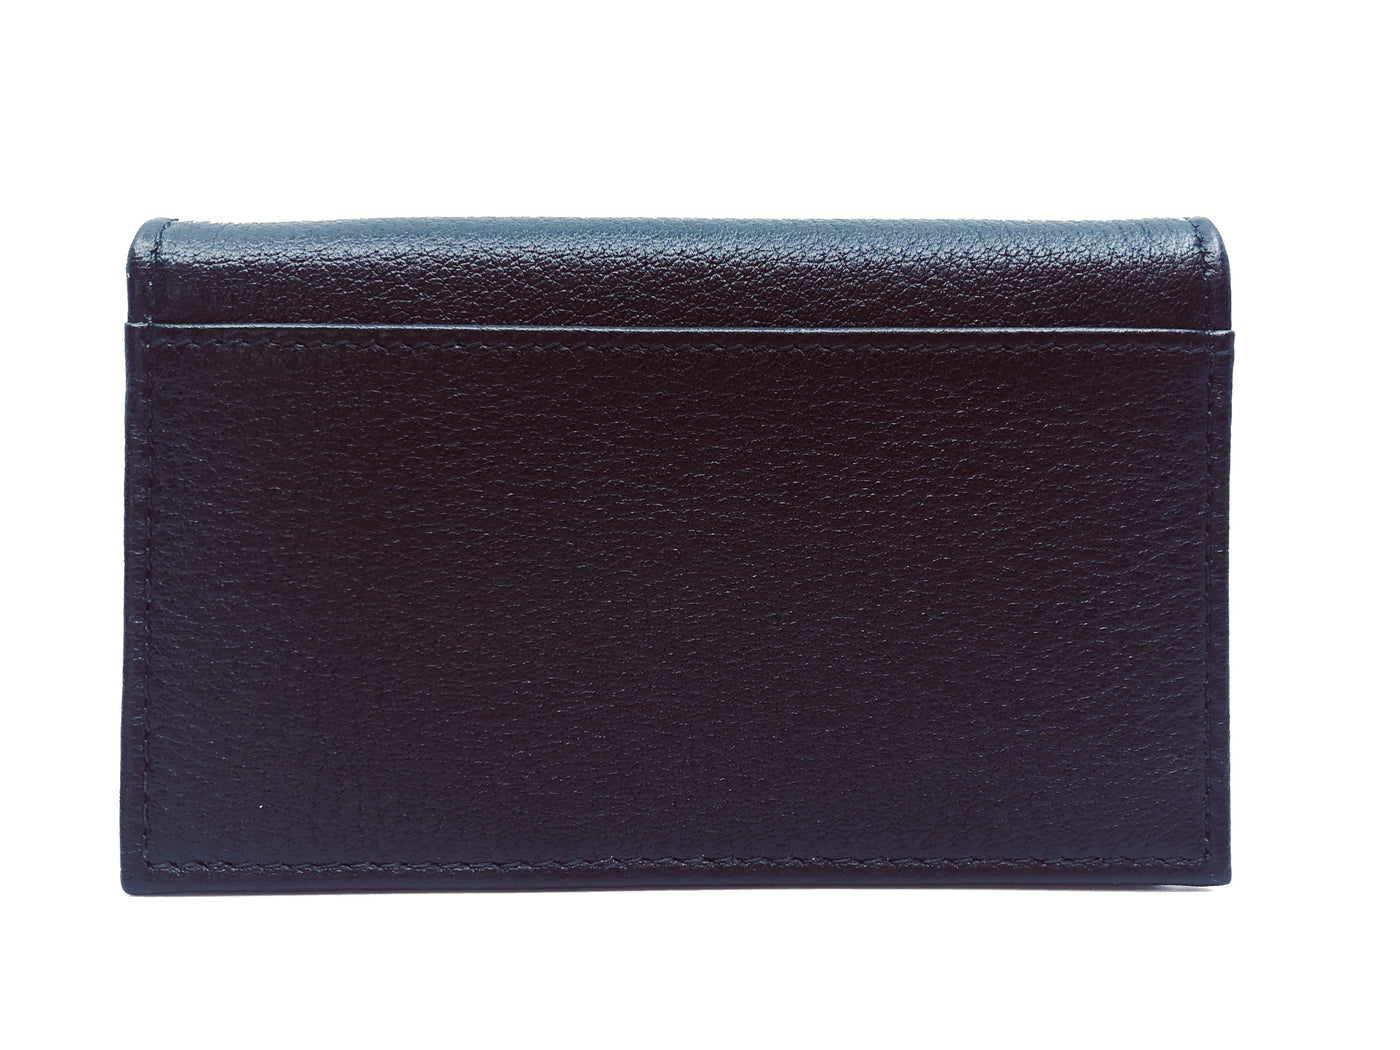 Prada Black Vitello Grain Soft Calf Leather Credit Card Case Wallet - LUXURYMRKT